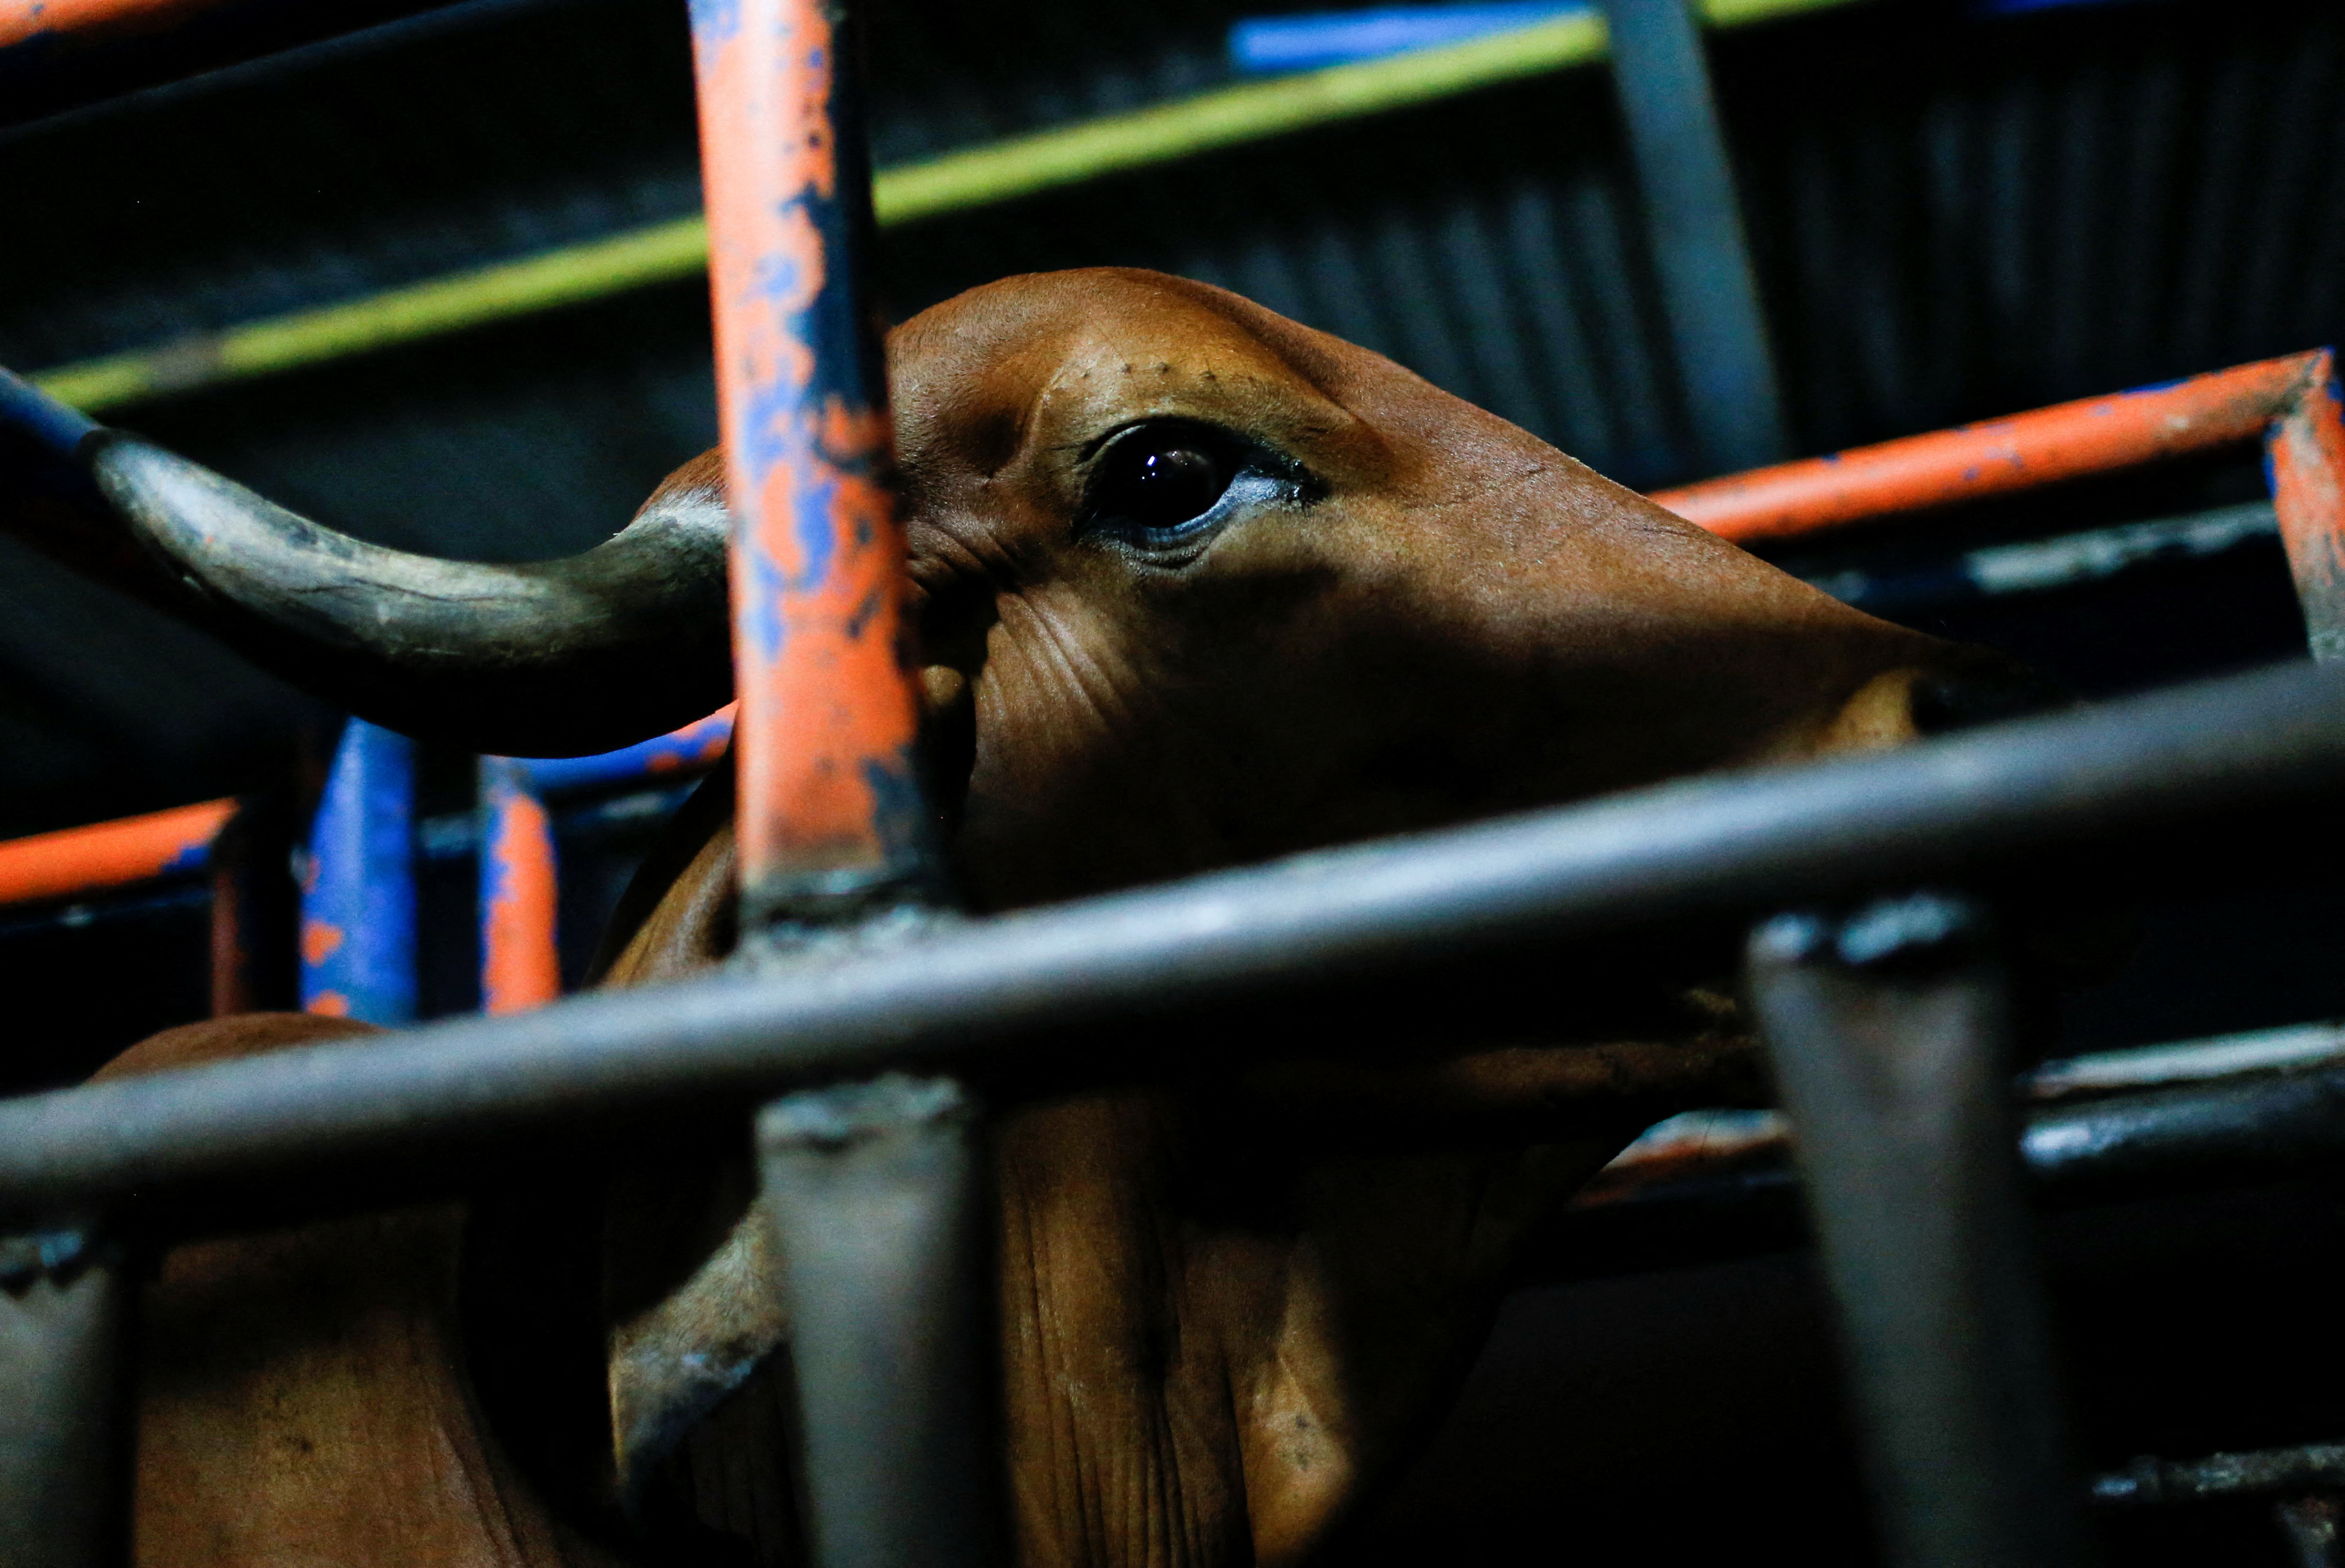 A cow stands in a milking pen at a cattle farm, in Barinas, Venezuela January 11, 2022. Picture taken January 11, 2022. REUTERS/Leonardo Fernandez Viloria